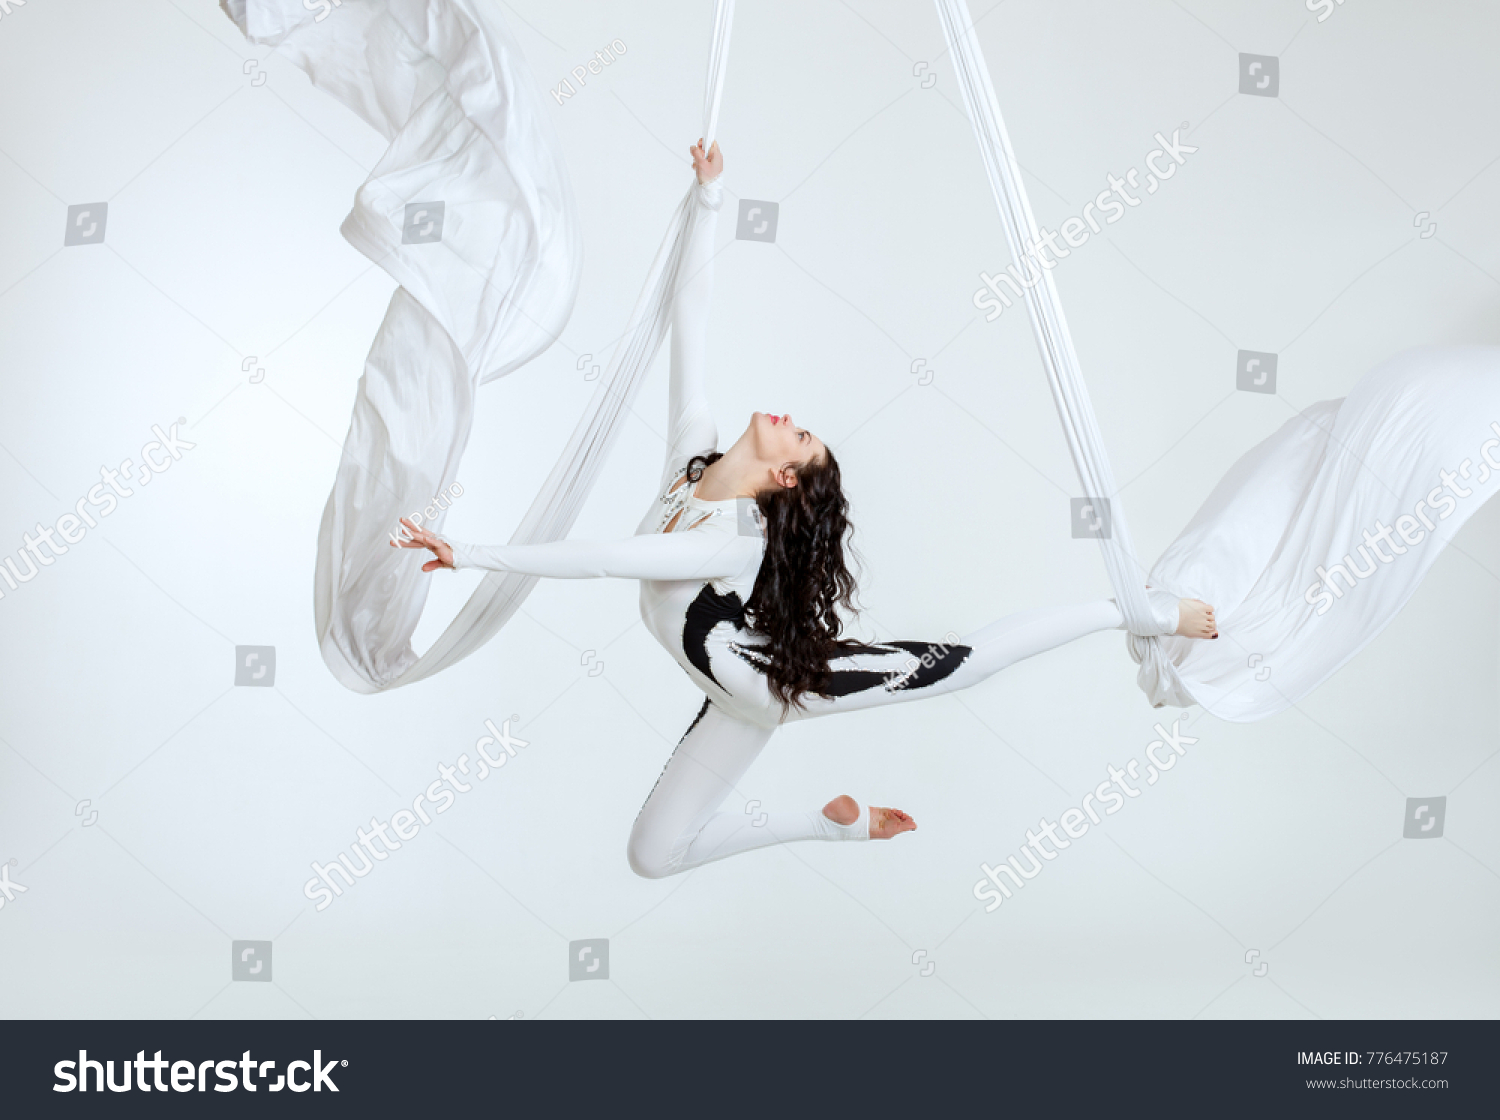 Aerial artistic acrobatics, a woman demonstrates poses. #776475187